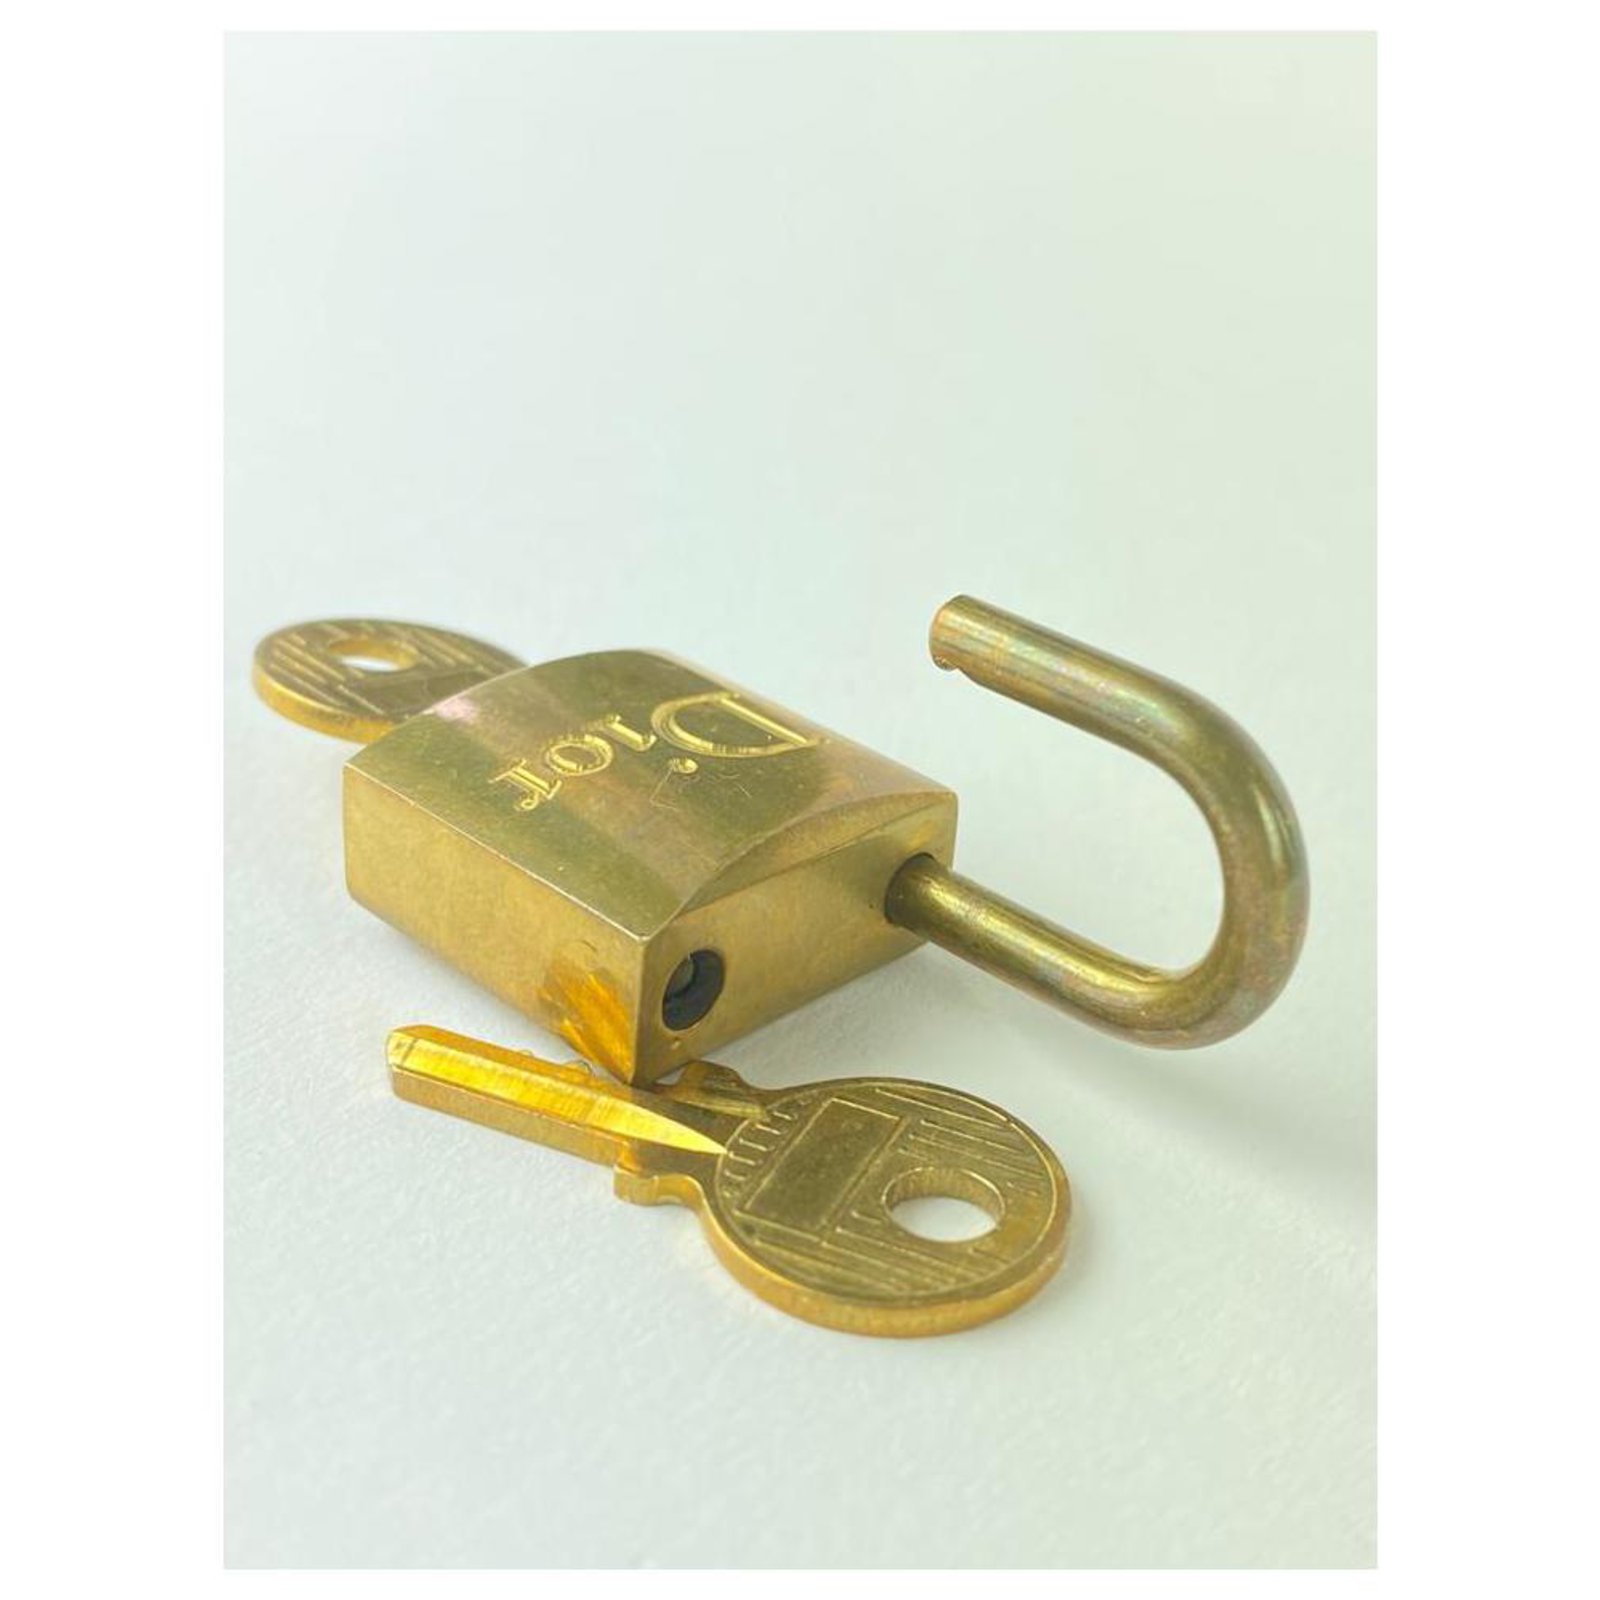 Dior Brass Logo Padlock and Key Lock Bag Charm Cadena 1DR1028